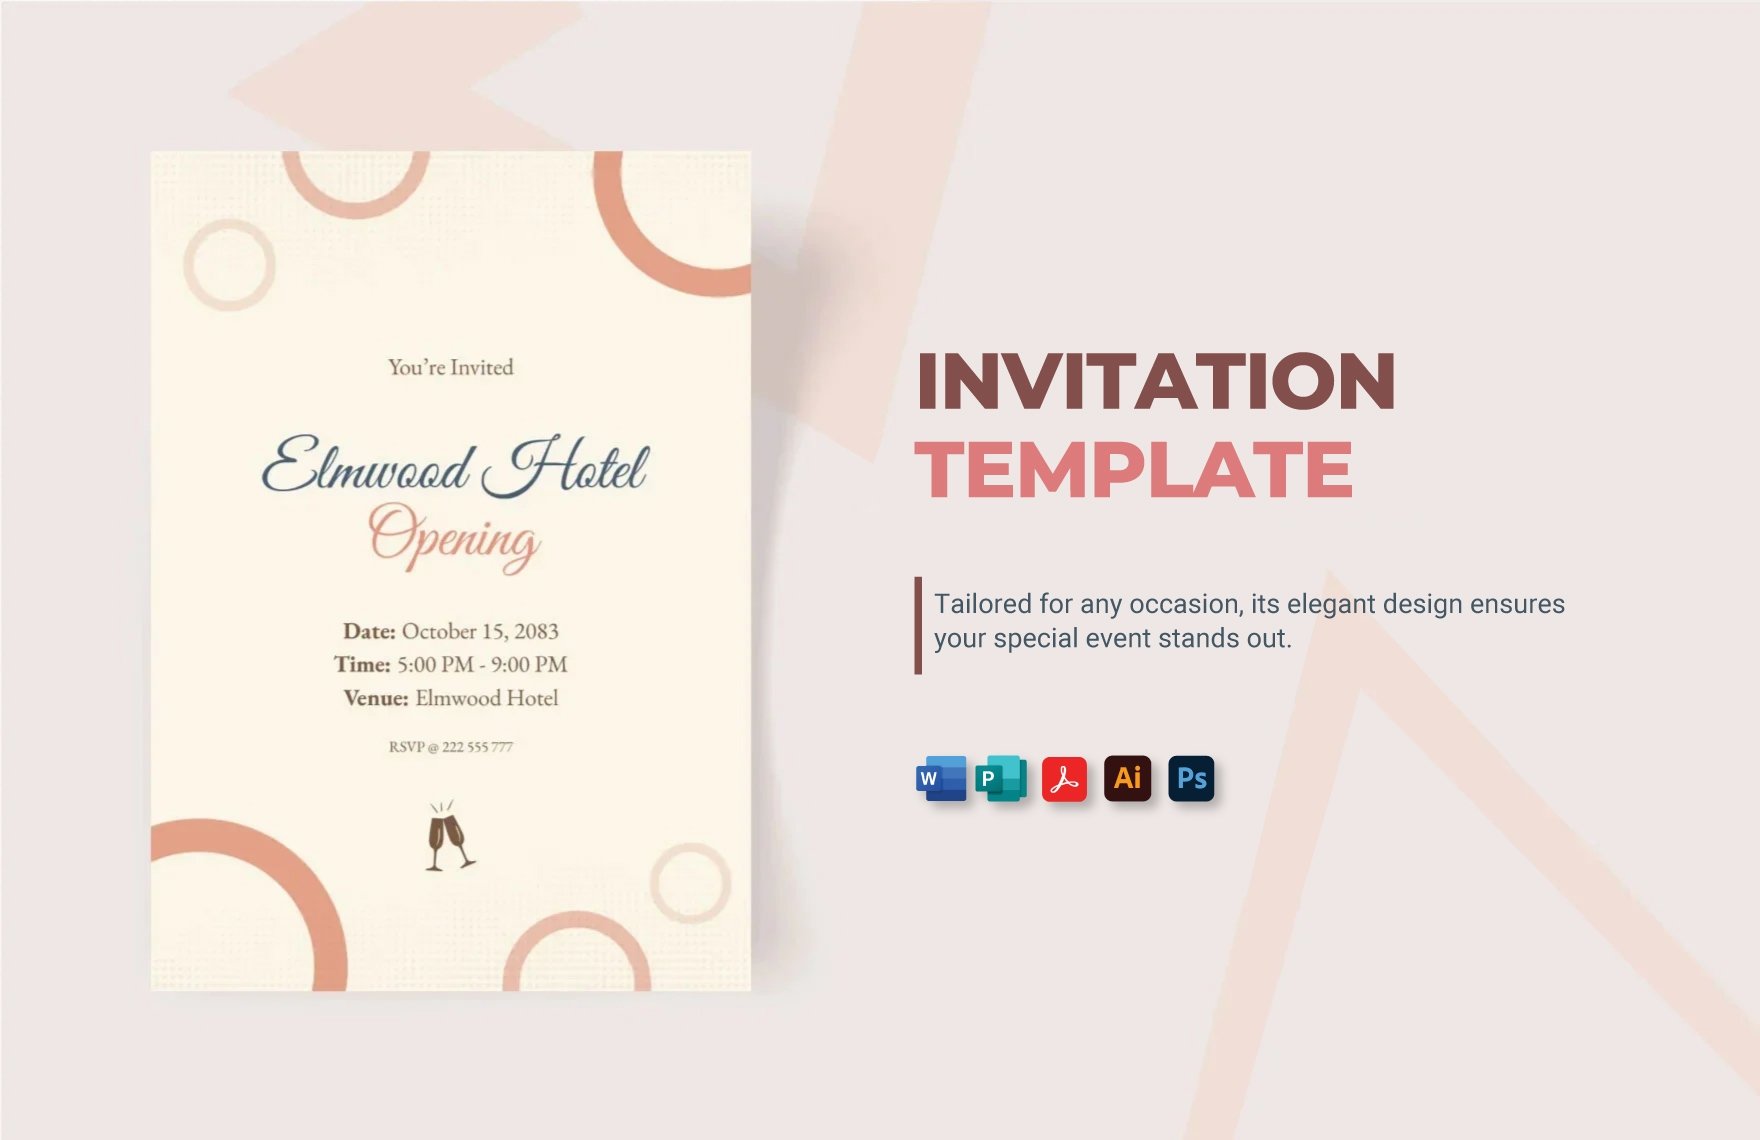 Punjabi Engagement Ceremony Invitation Card - Ring Ceremony Invitation